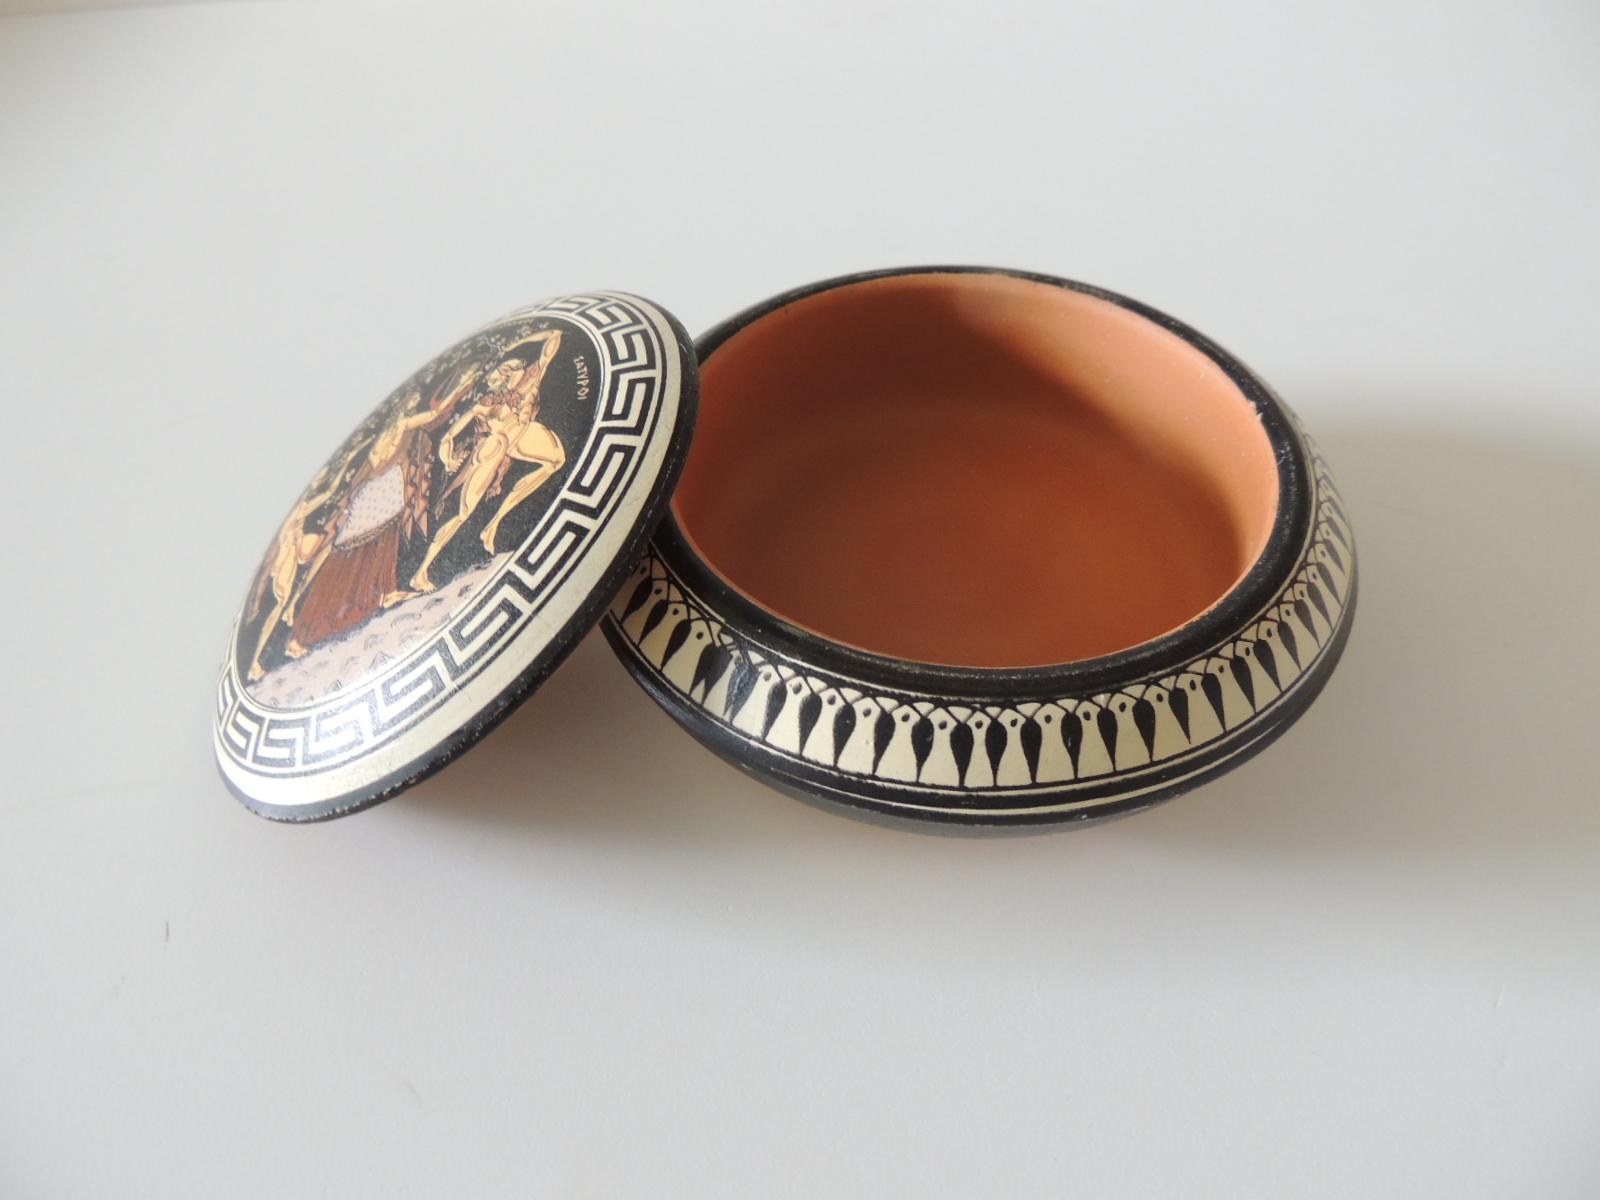 Greek key round hand painted trinket lidded box.
Size: 4.75 x 4.75 x 1.25
Stamped.